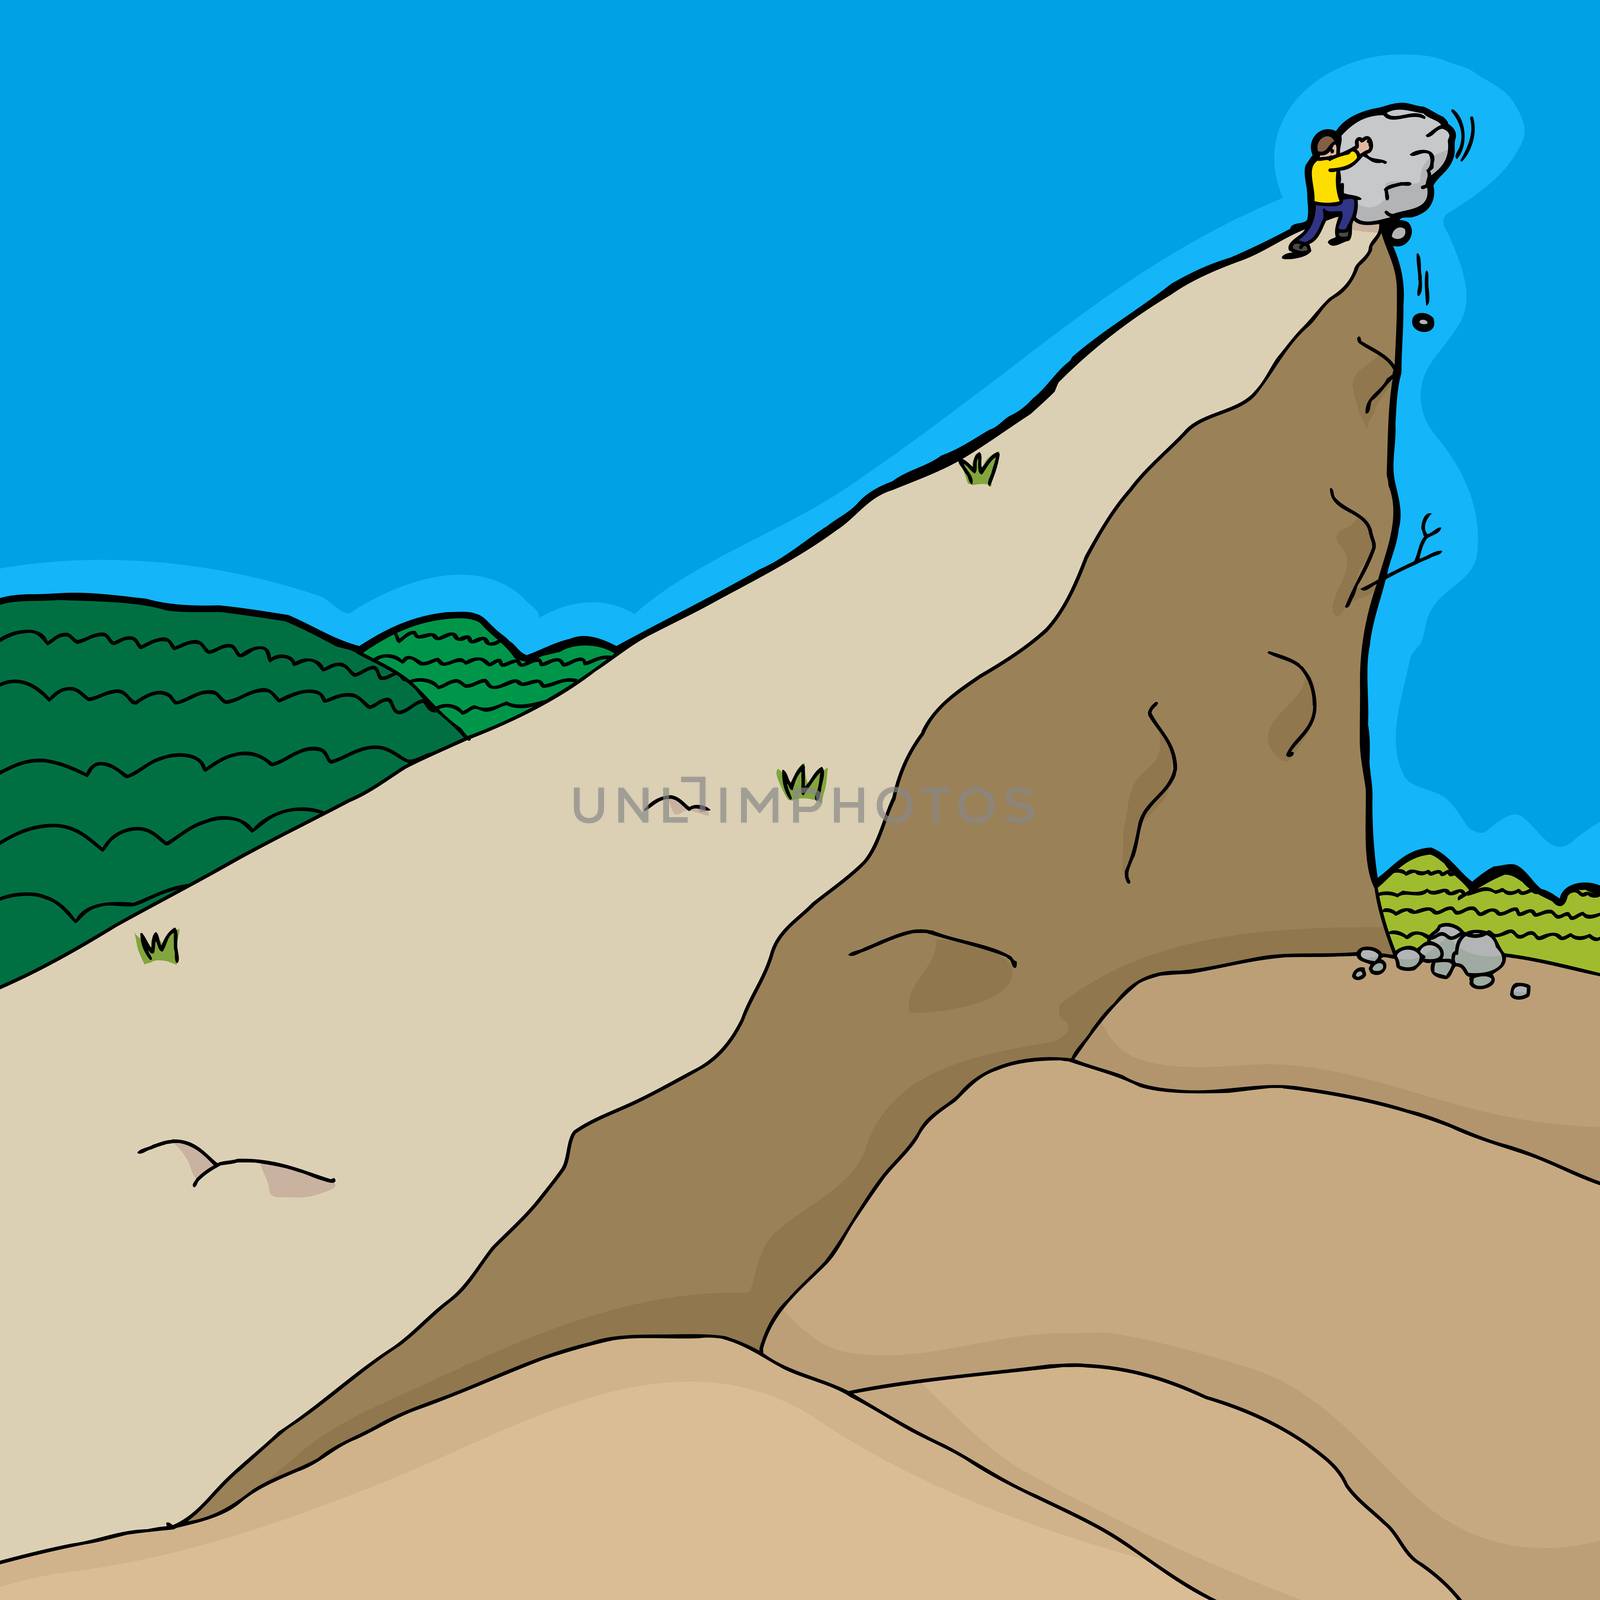 Cartoon of determined man pushing rocks up hill